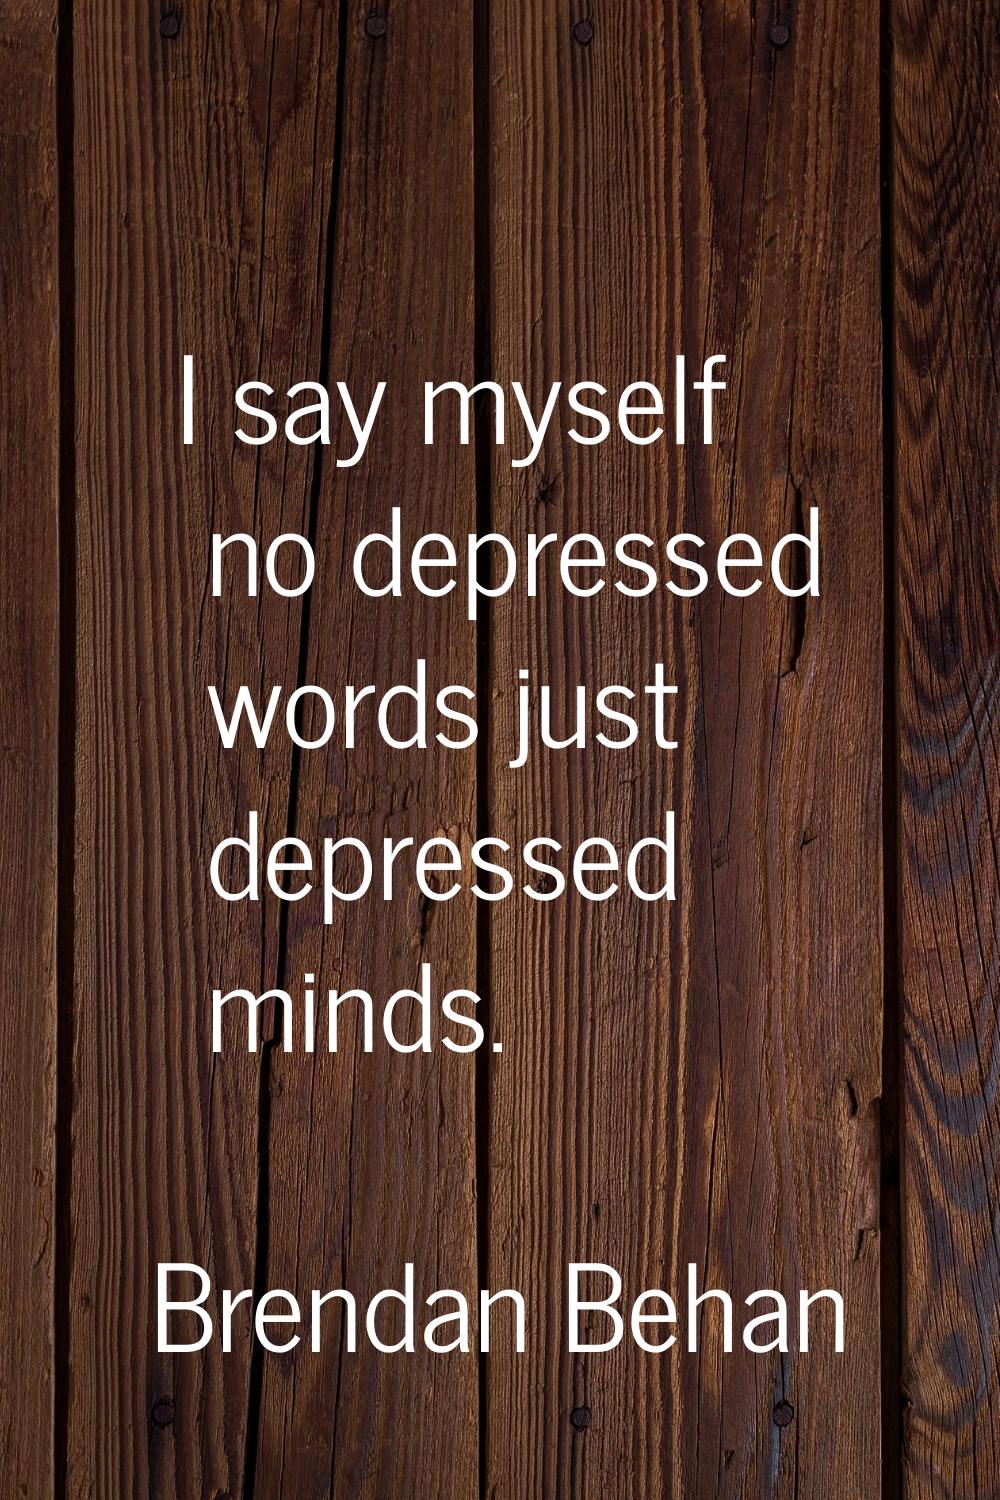 I say myself no depressed words just depressed minds.